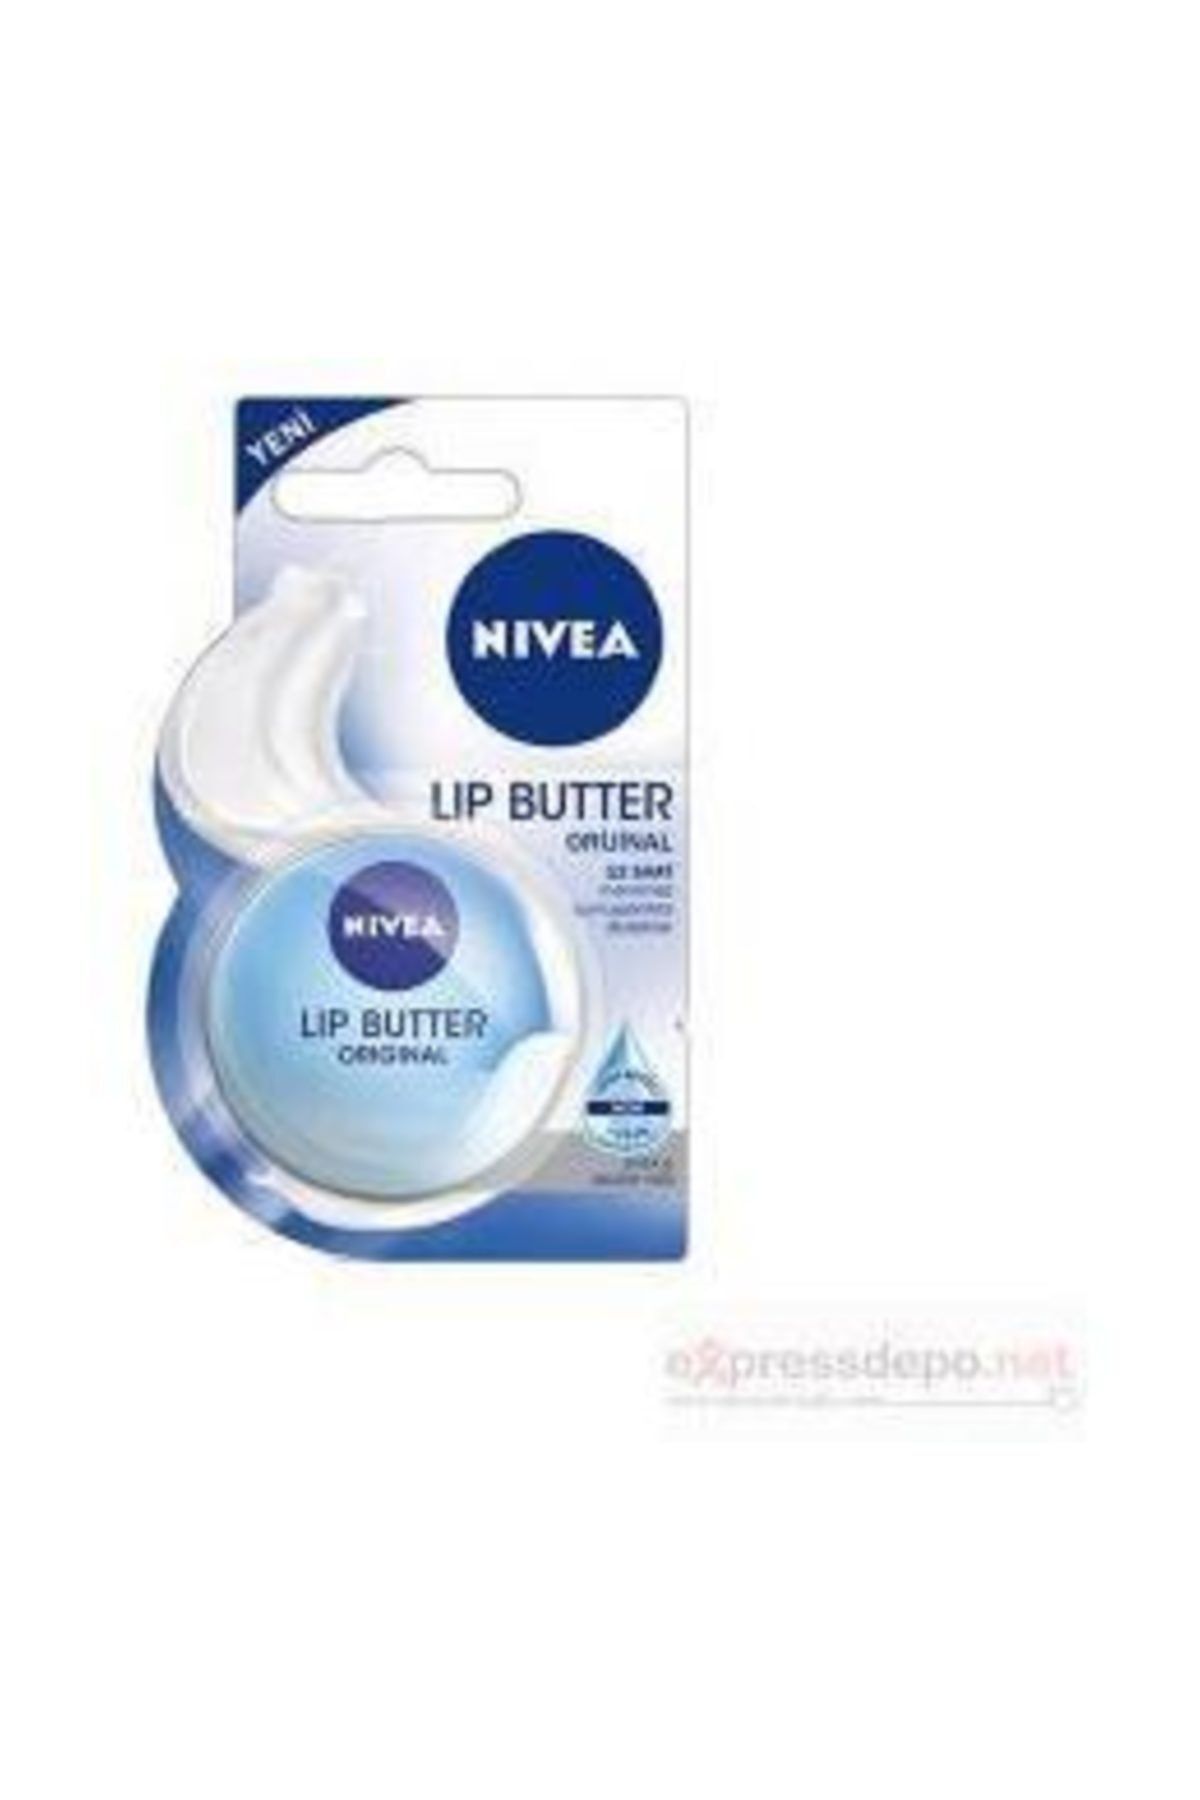 NIVEA Original Dudak Bakım Kremi lip Balm lipbutter